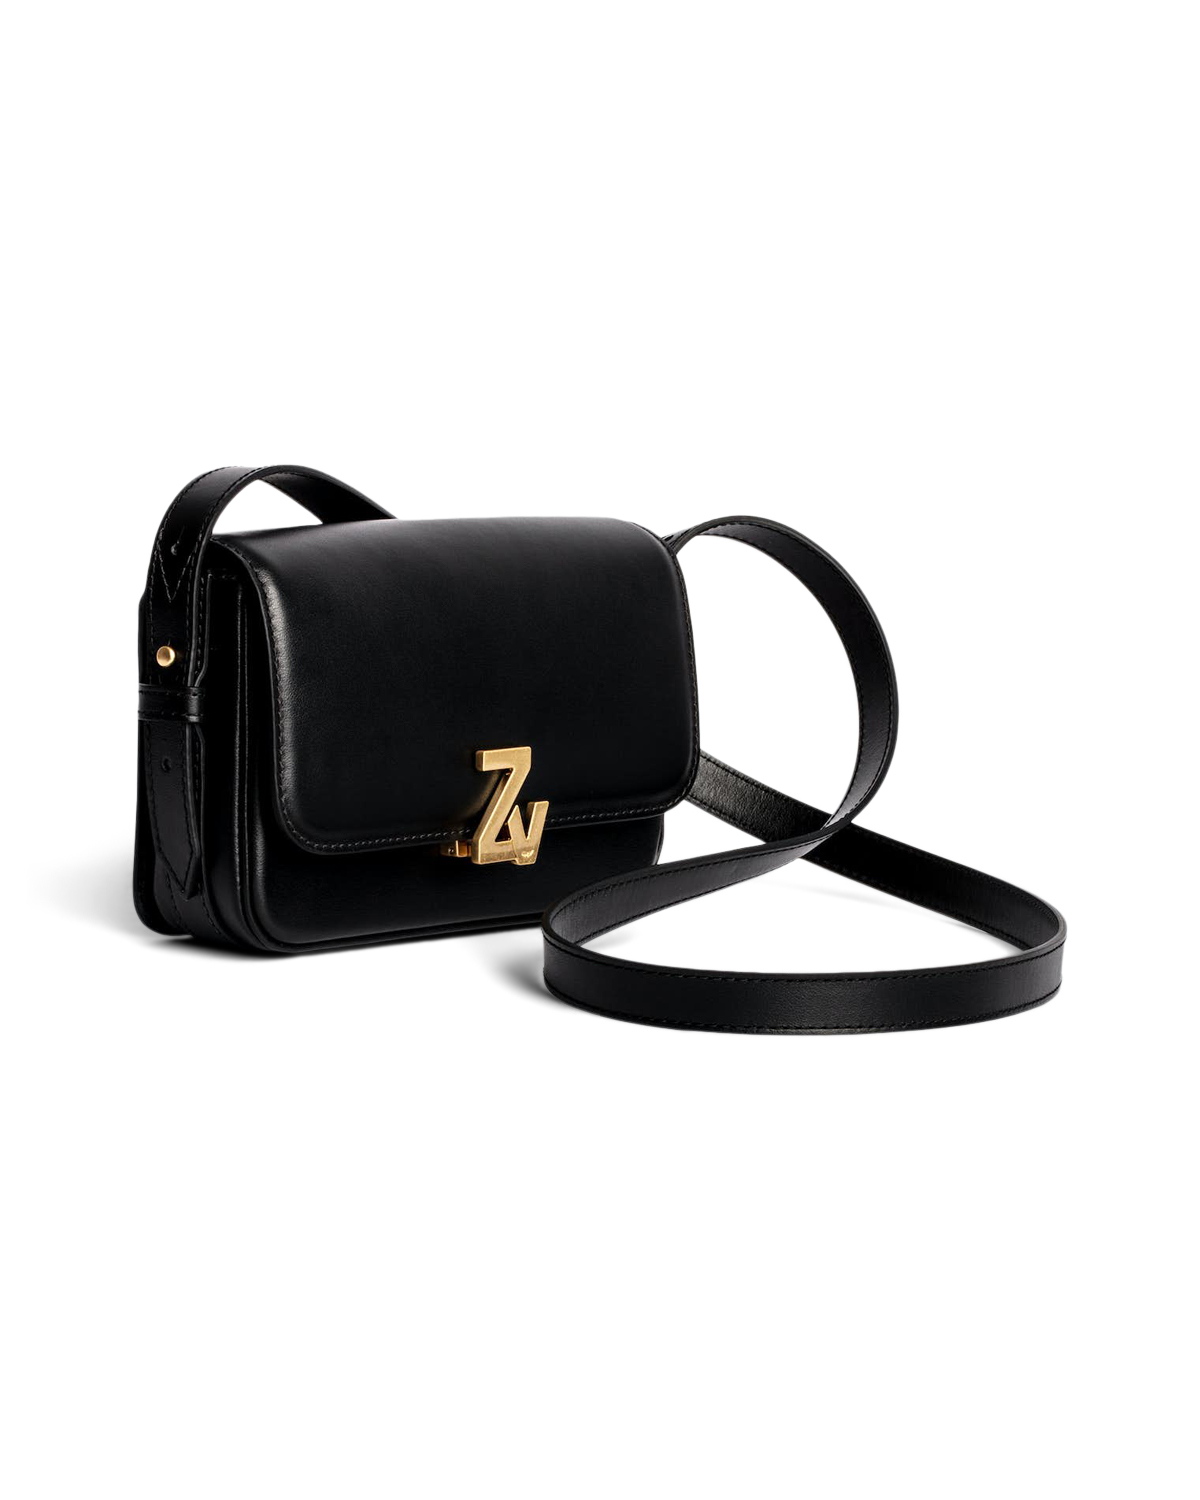 Zadig & Voltaire ZV Initiale Le City Bag